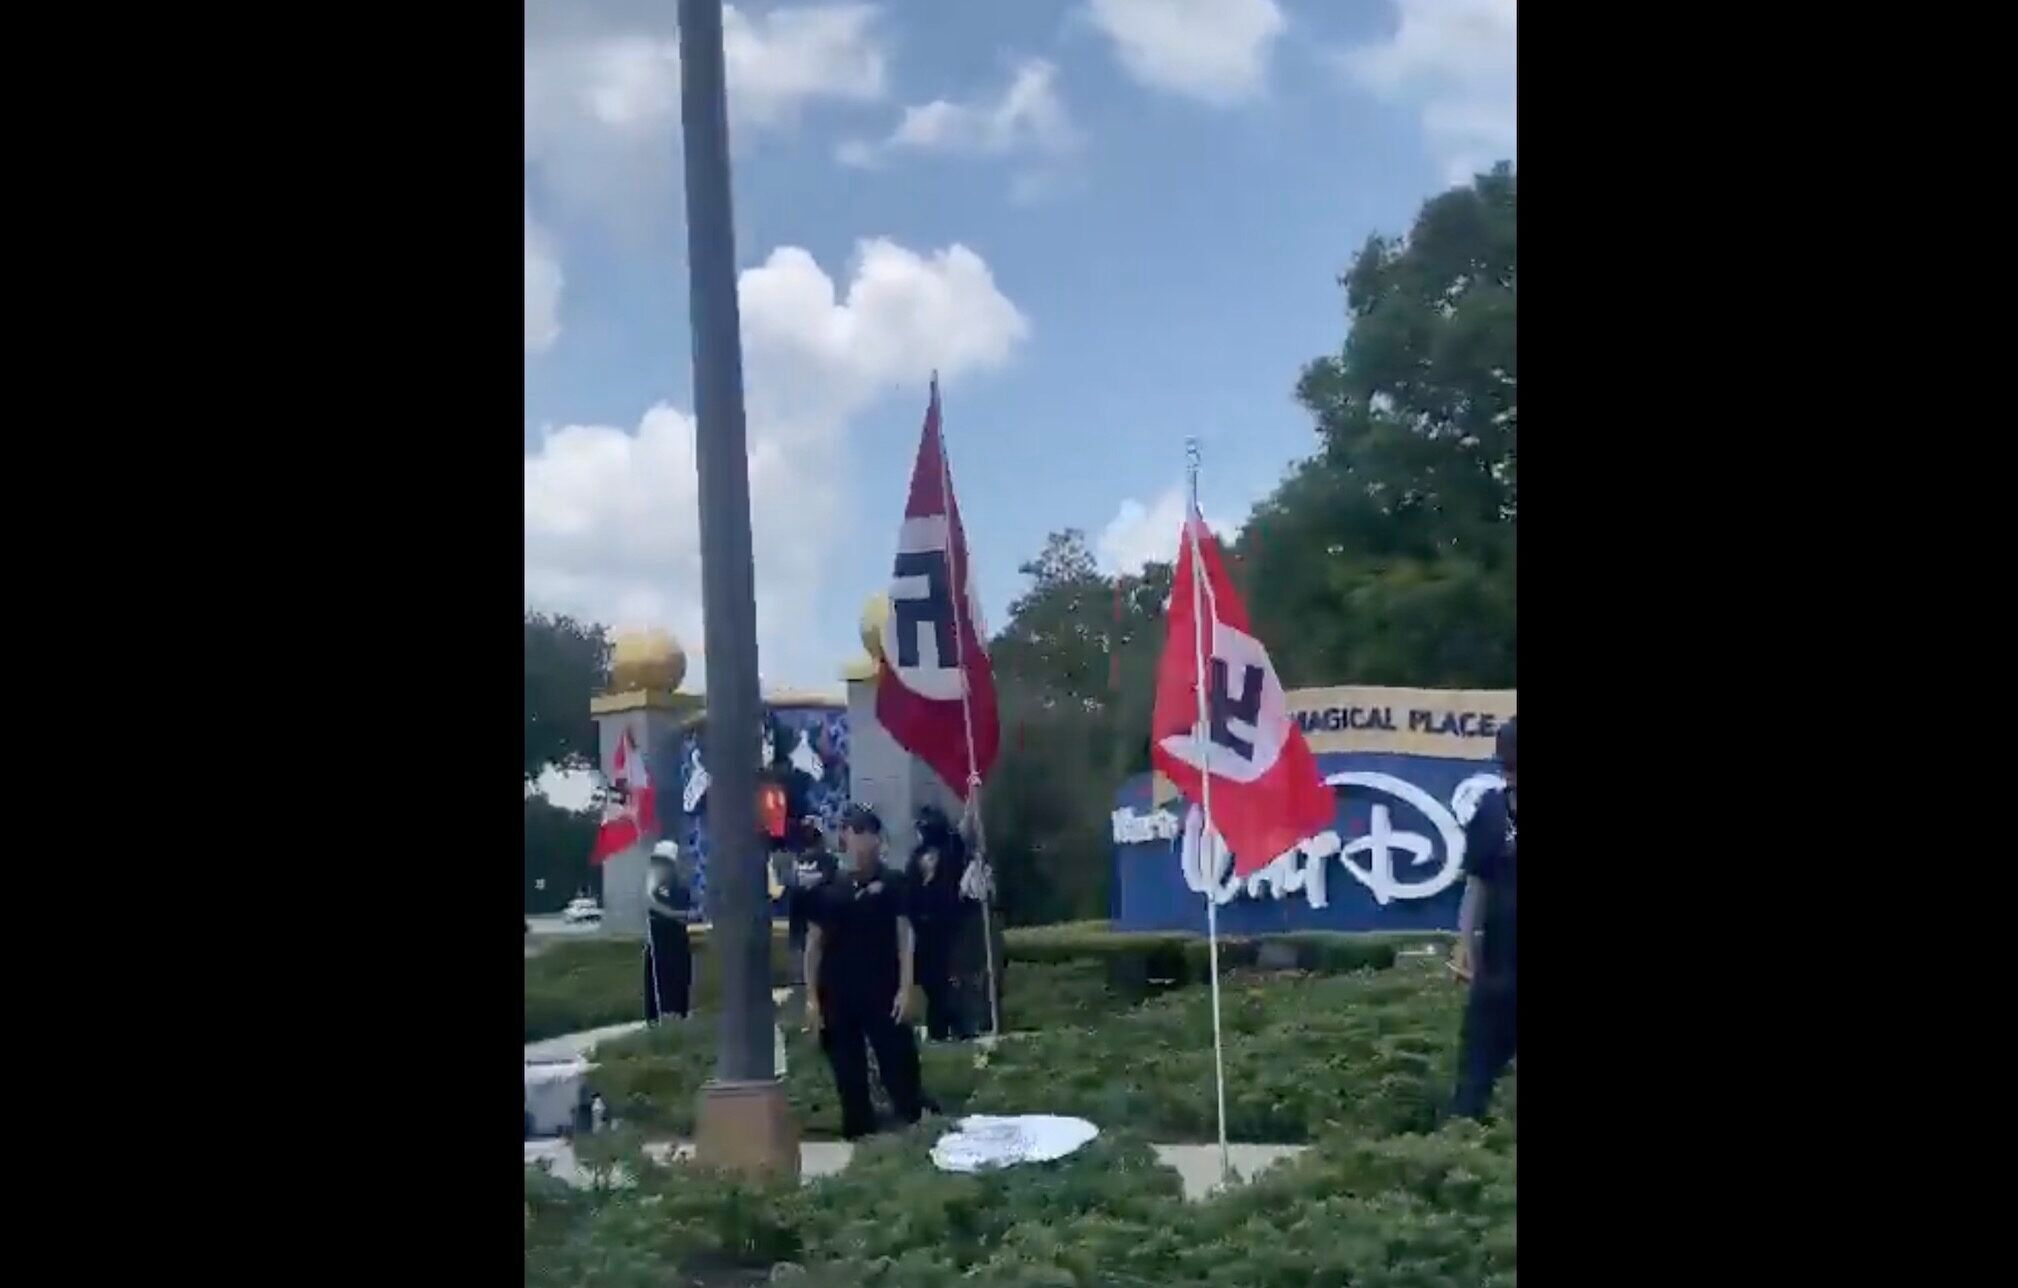 Nazis protest outside Disney world